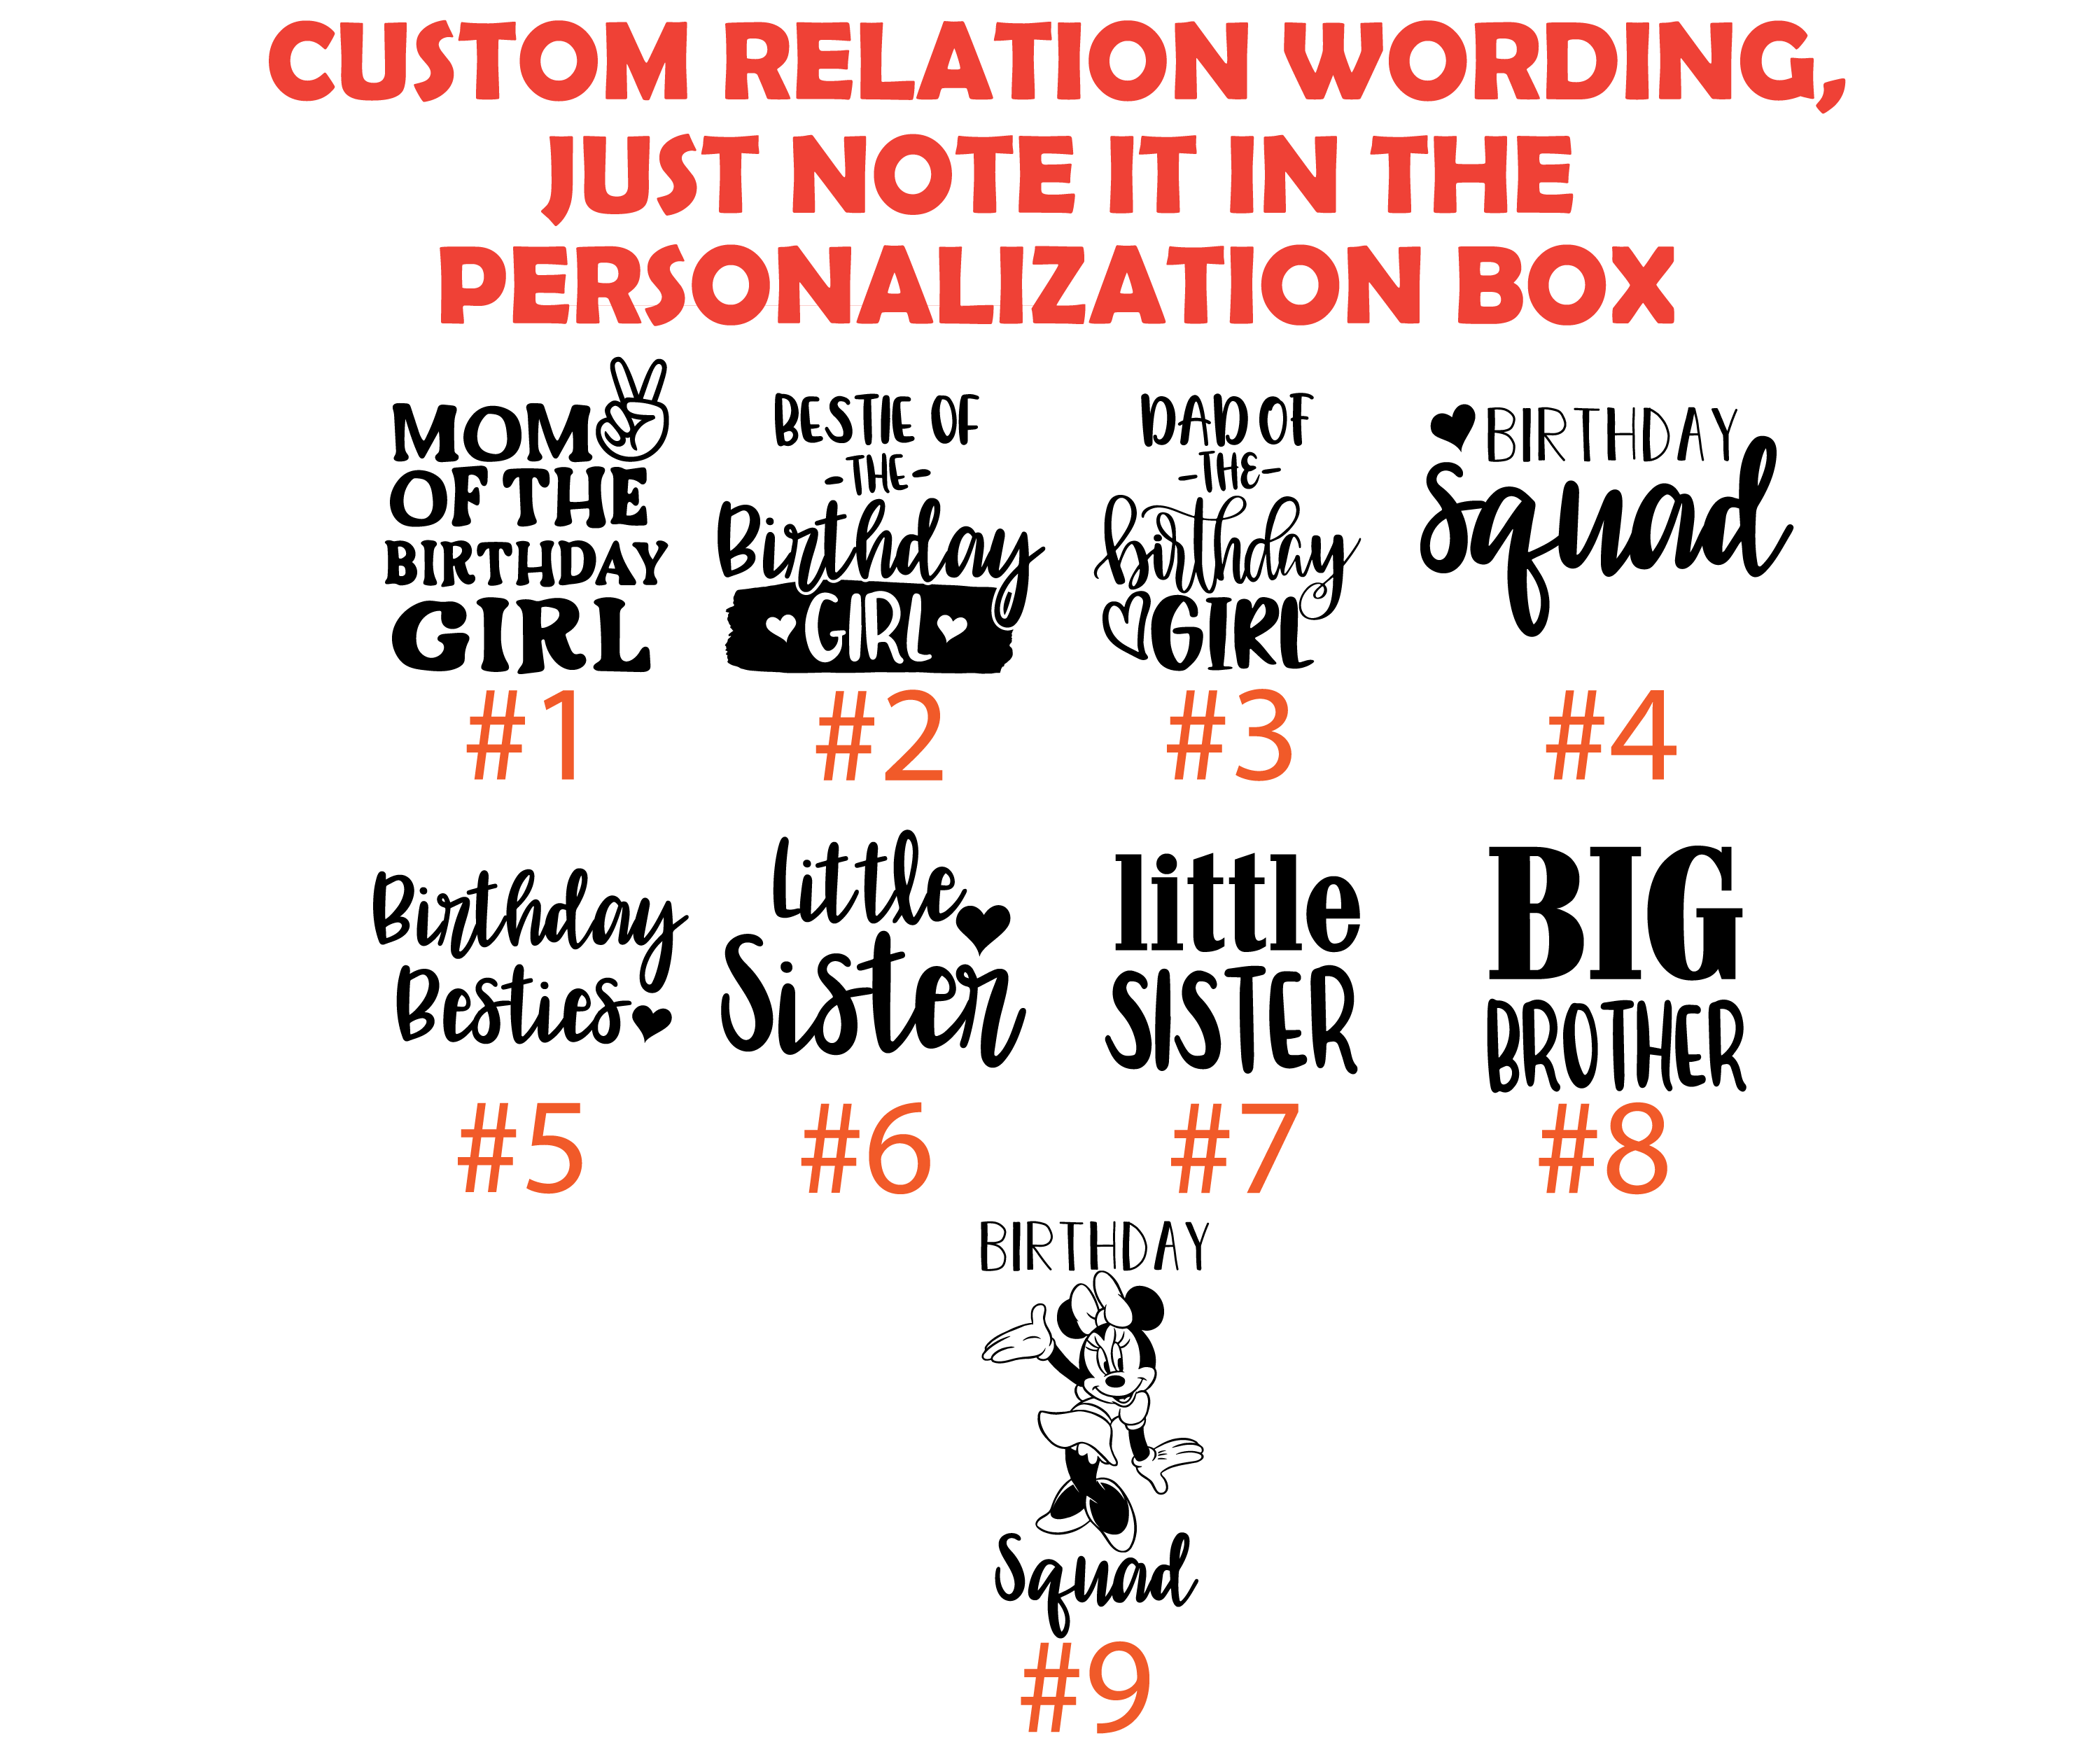 Custom Relation of the Birthday Girl or Boy